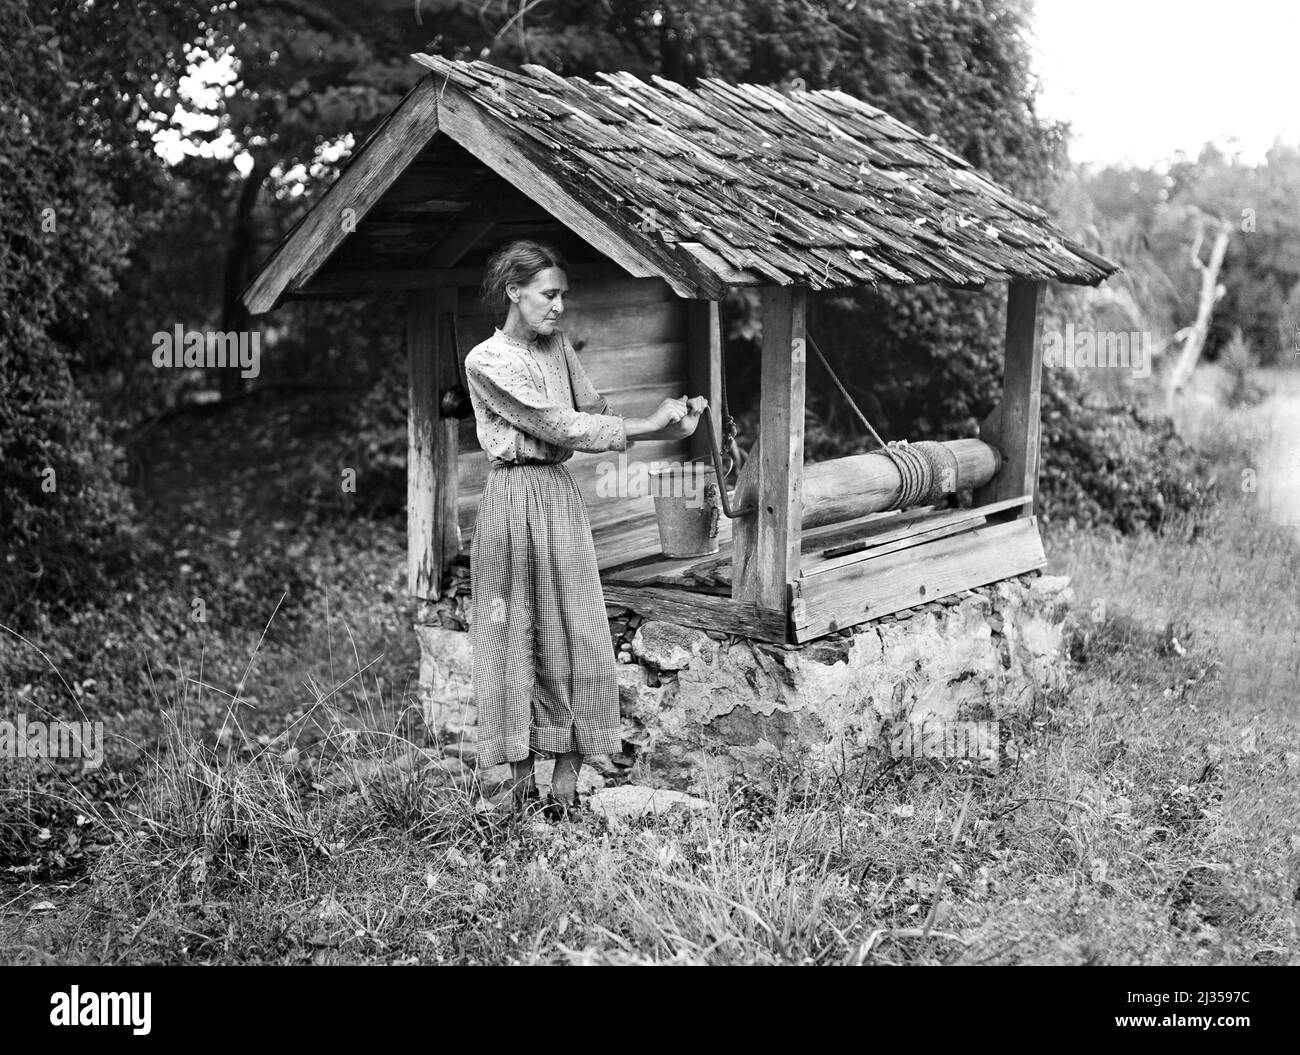 Miss Nettie Lloyd, Pellagra Victim, by Old Well House, Orange County, North Carolina, USA, Marion Post Wolcott, U.S. Office of War Information/U.S. Farm Security Administration, September 1939 Stock Photo